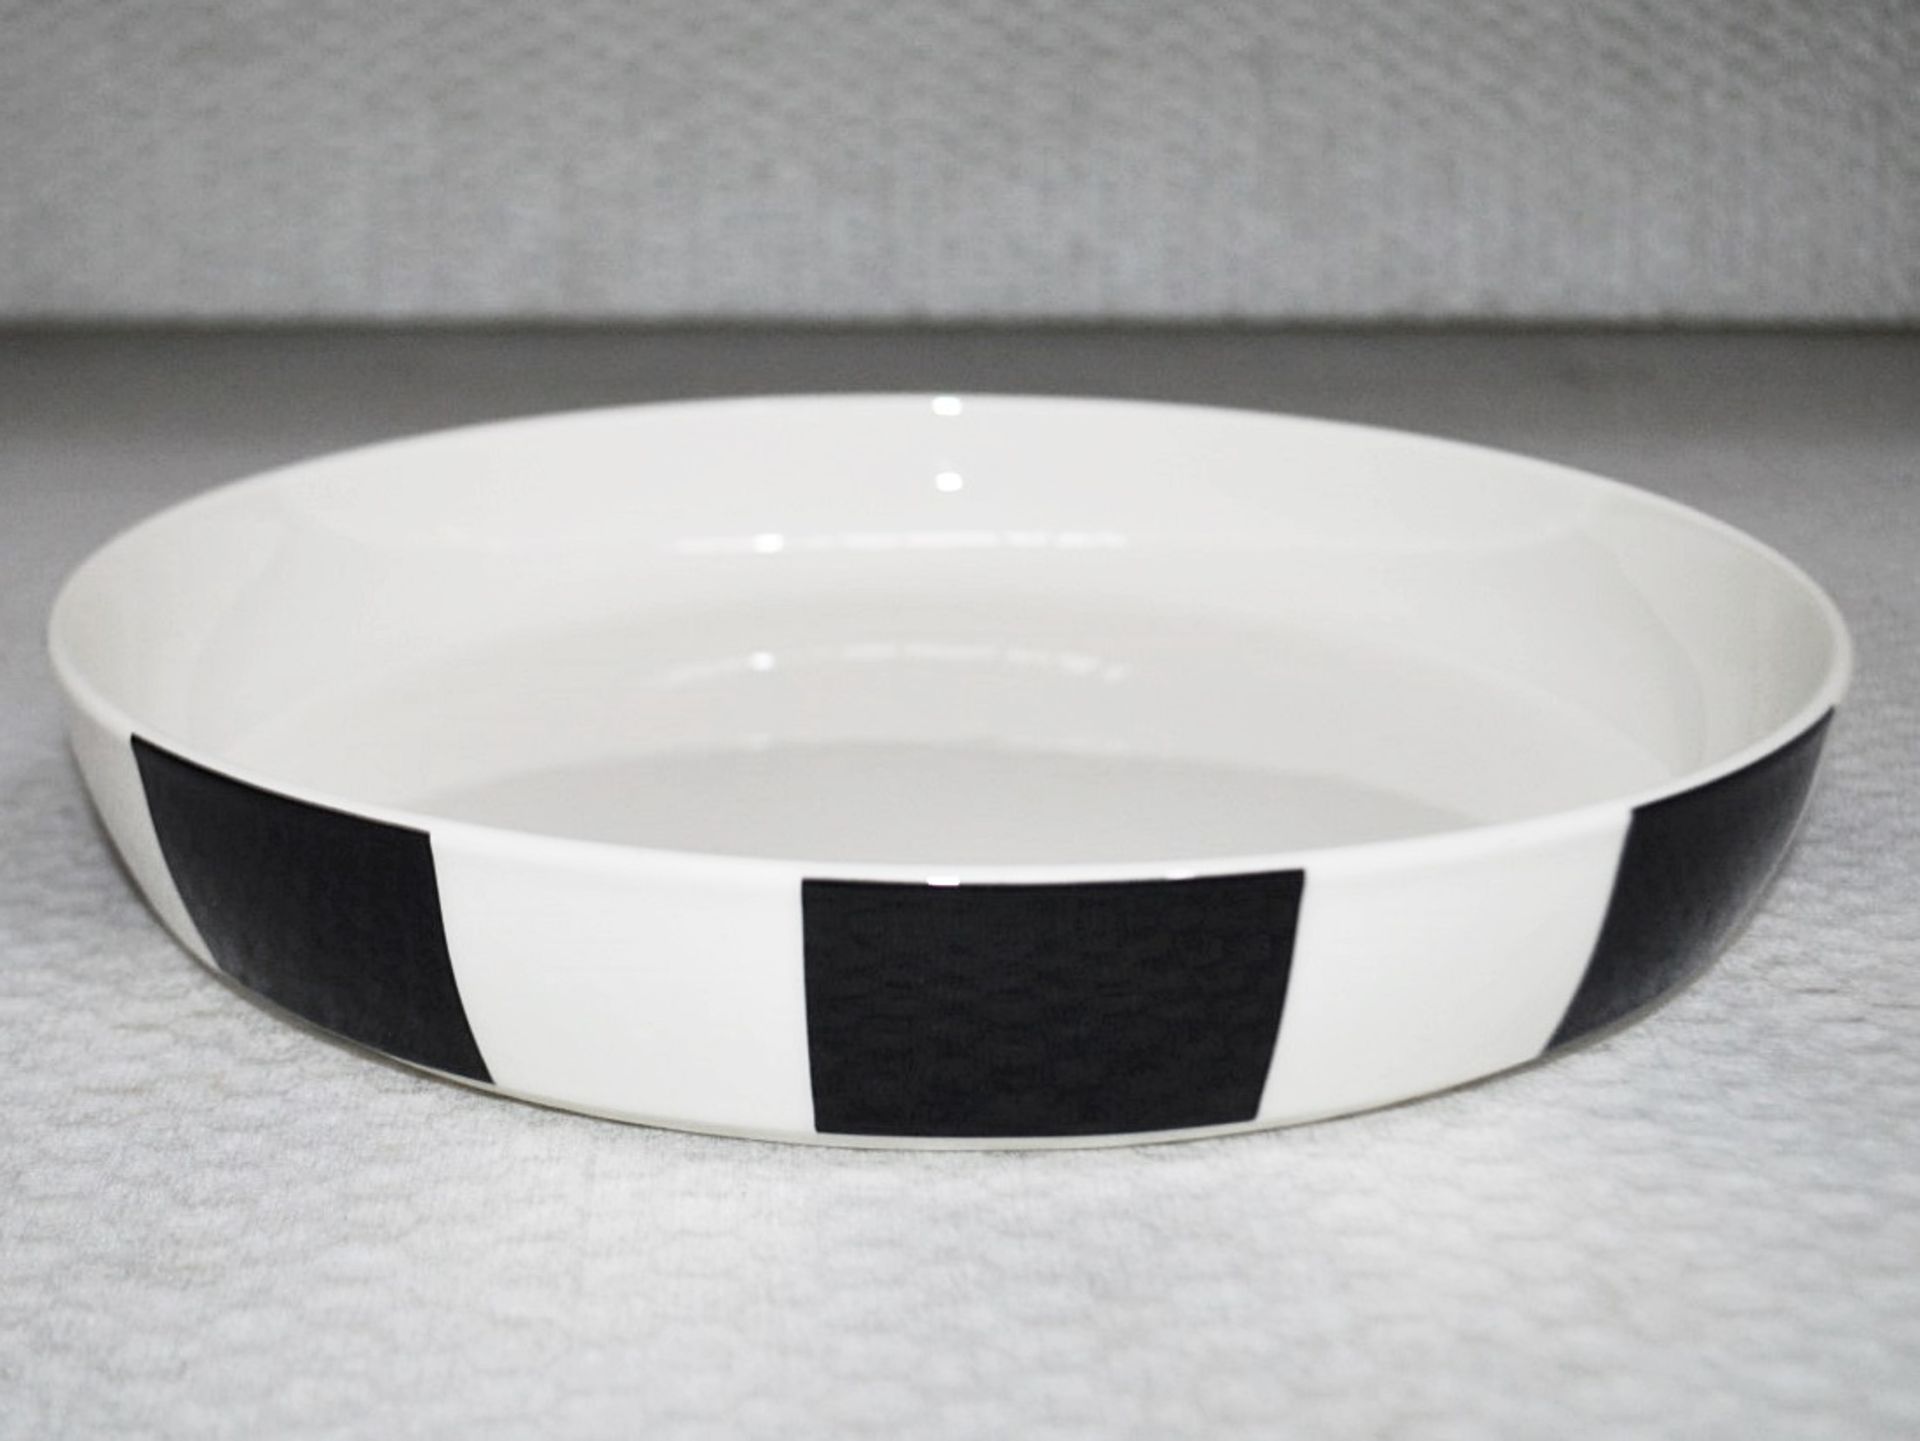 1 x VILLEROY & BOCH Premium Porcelain 2-Tone Bowl - Made In Germany - Dimensions: ø23.5cm x H4cm